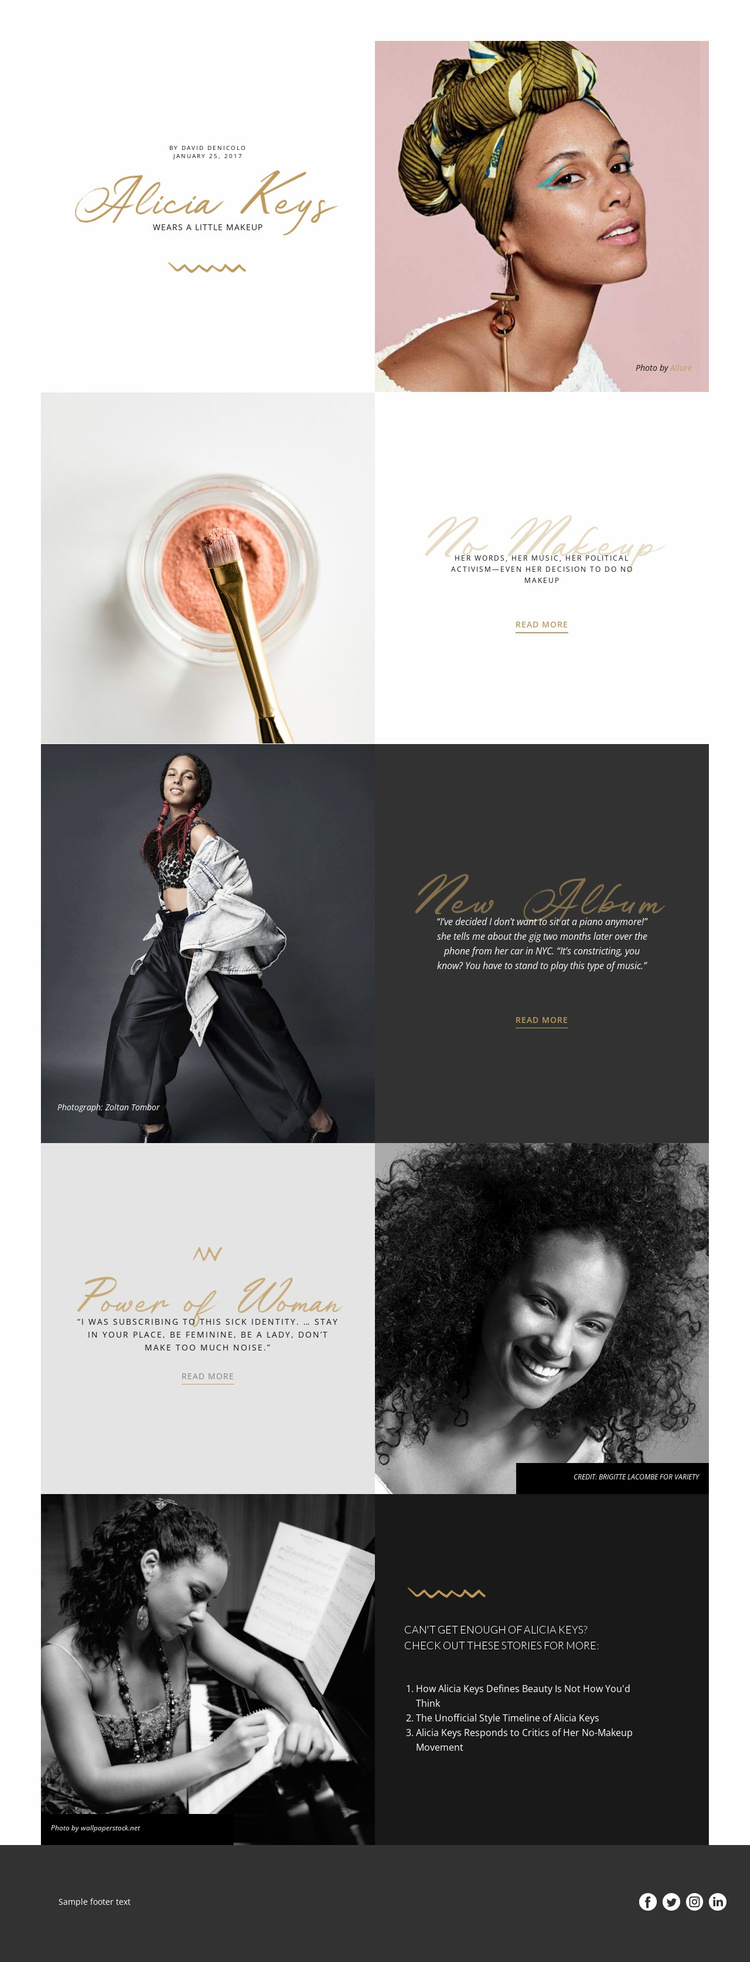 Alicia Keys Website Template